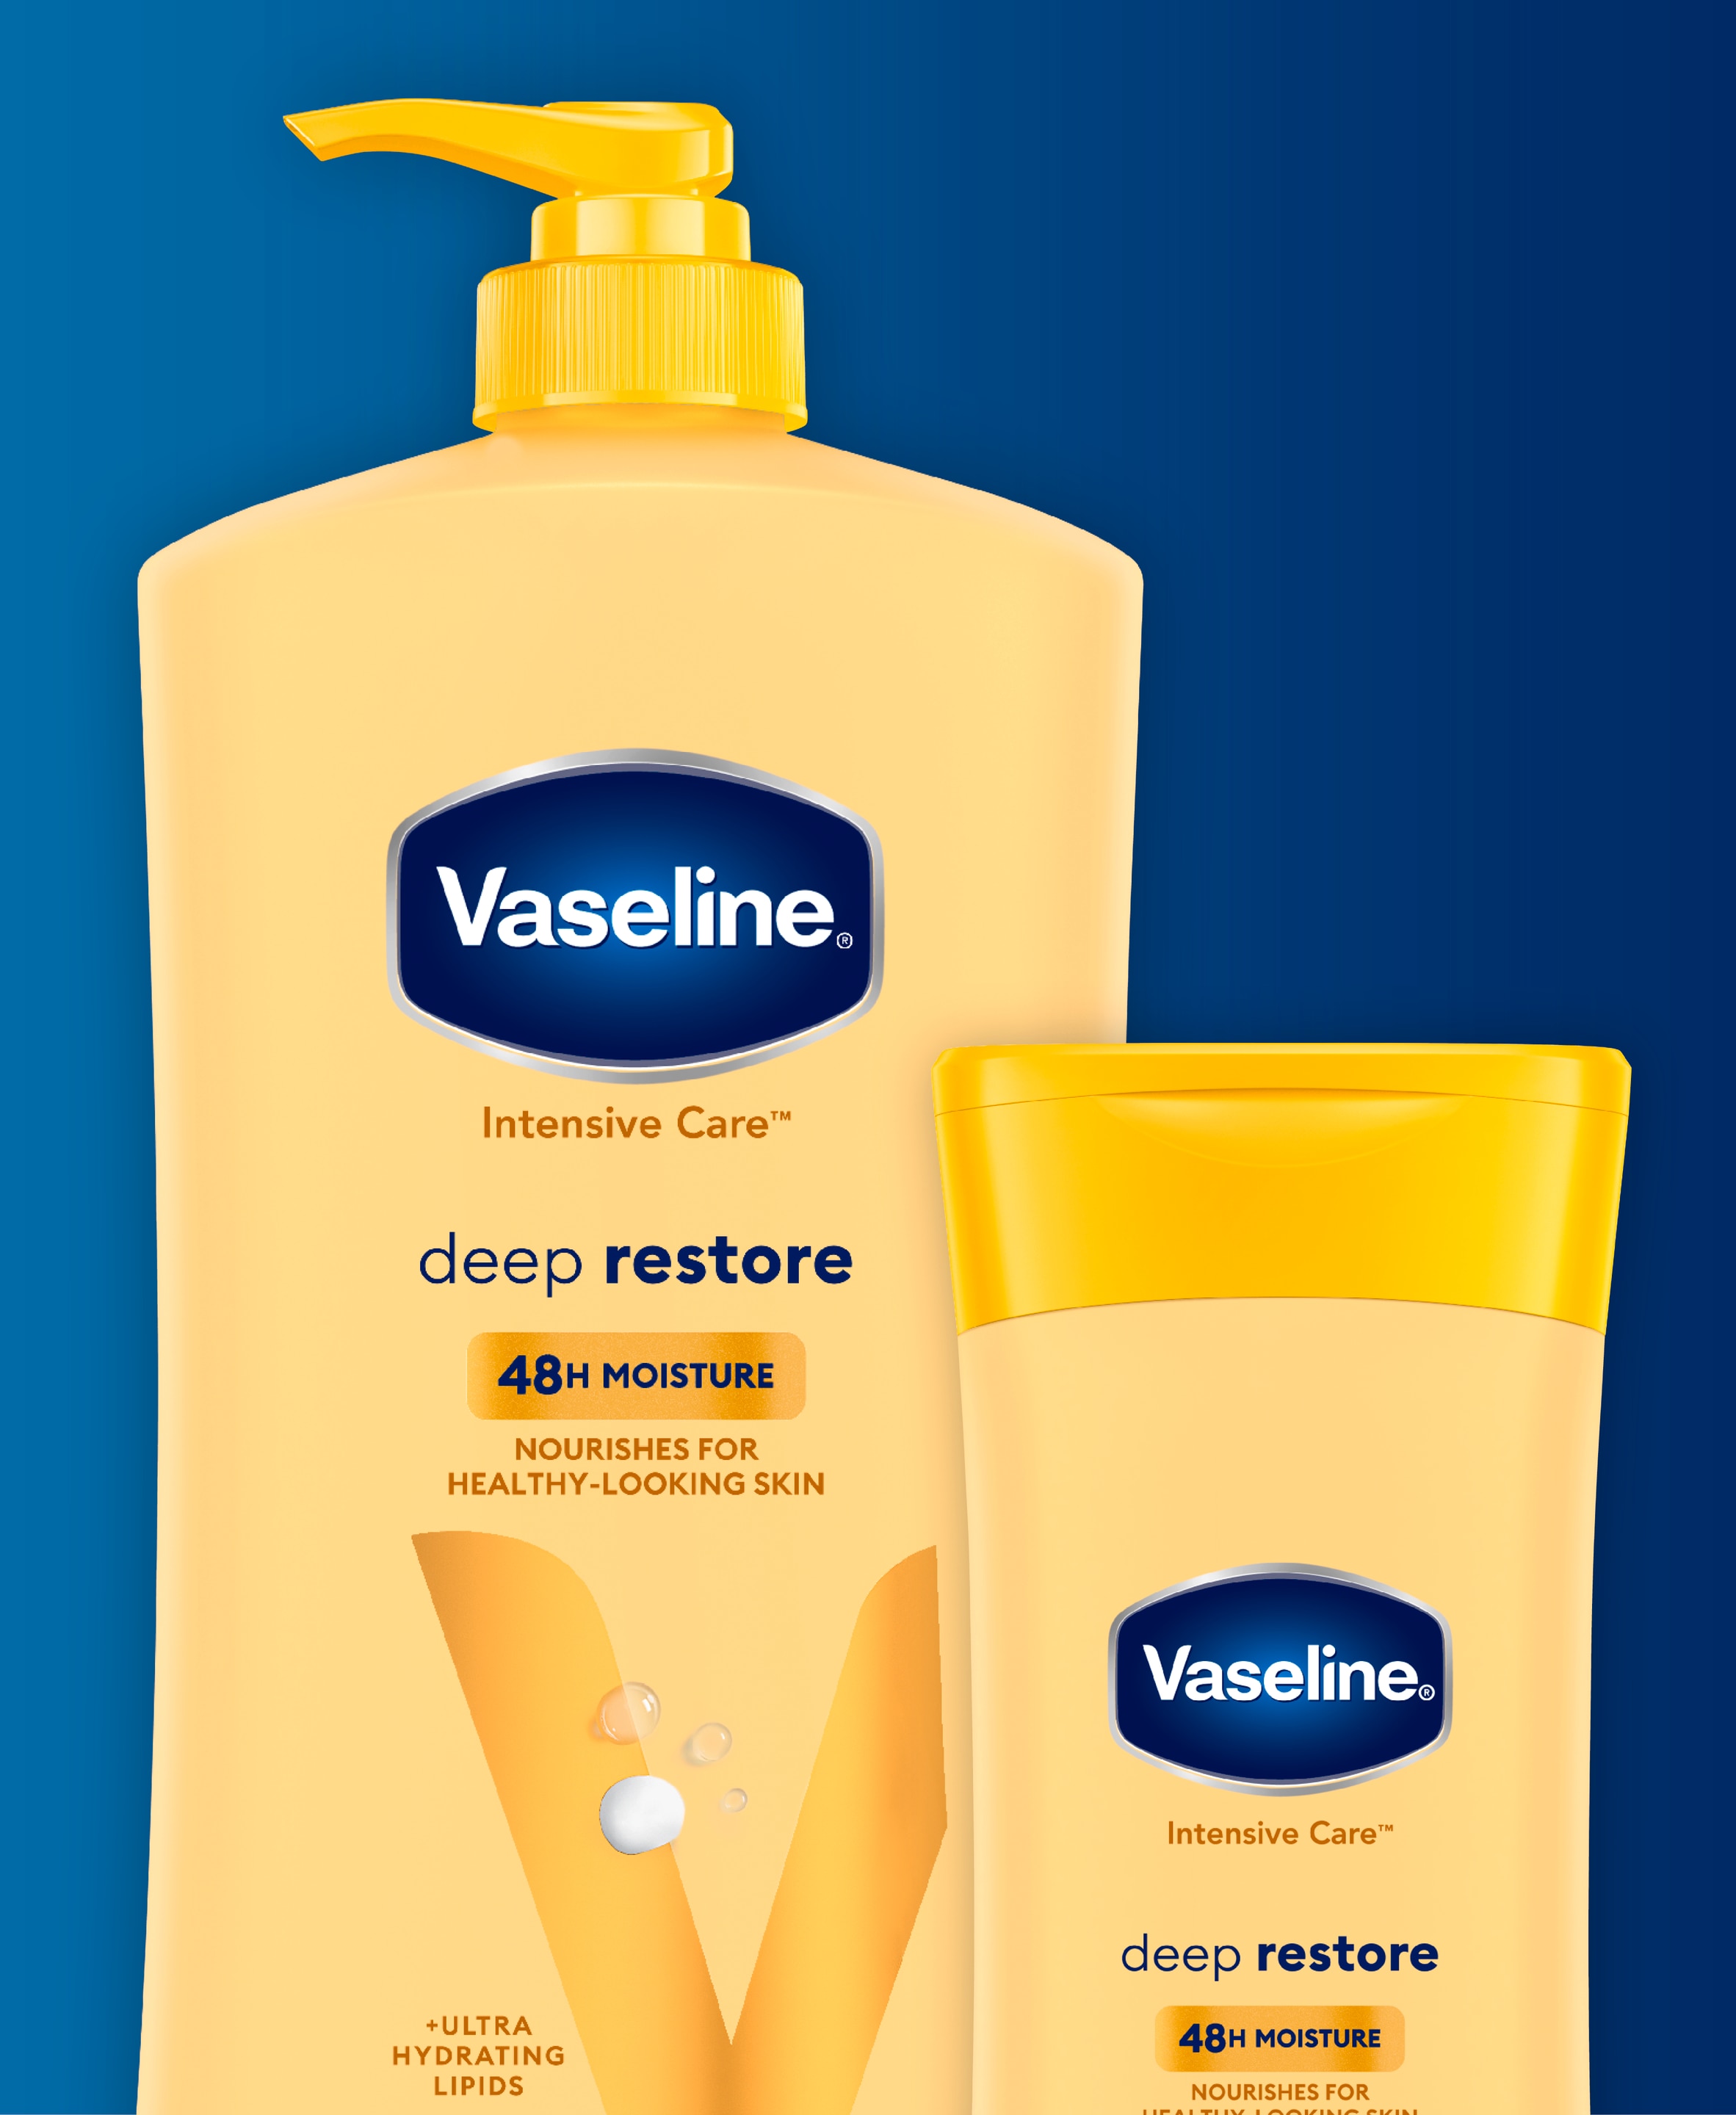 Packshots of Vaseline's Deep Restore lotion